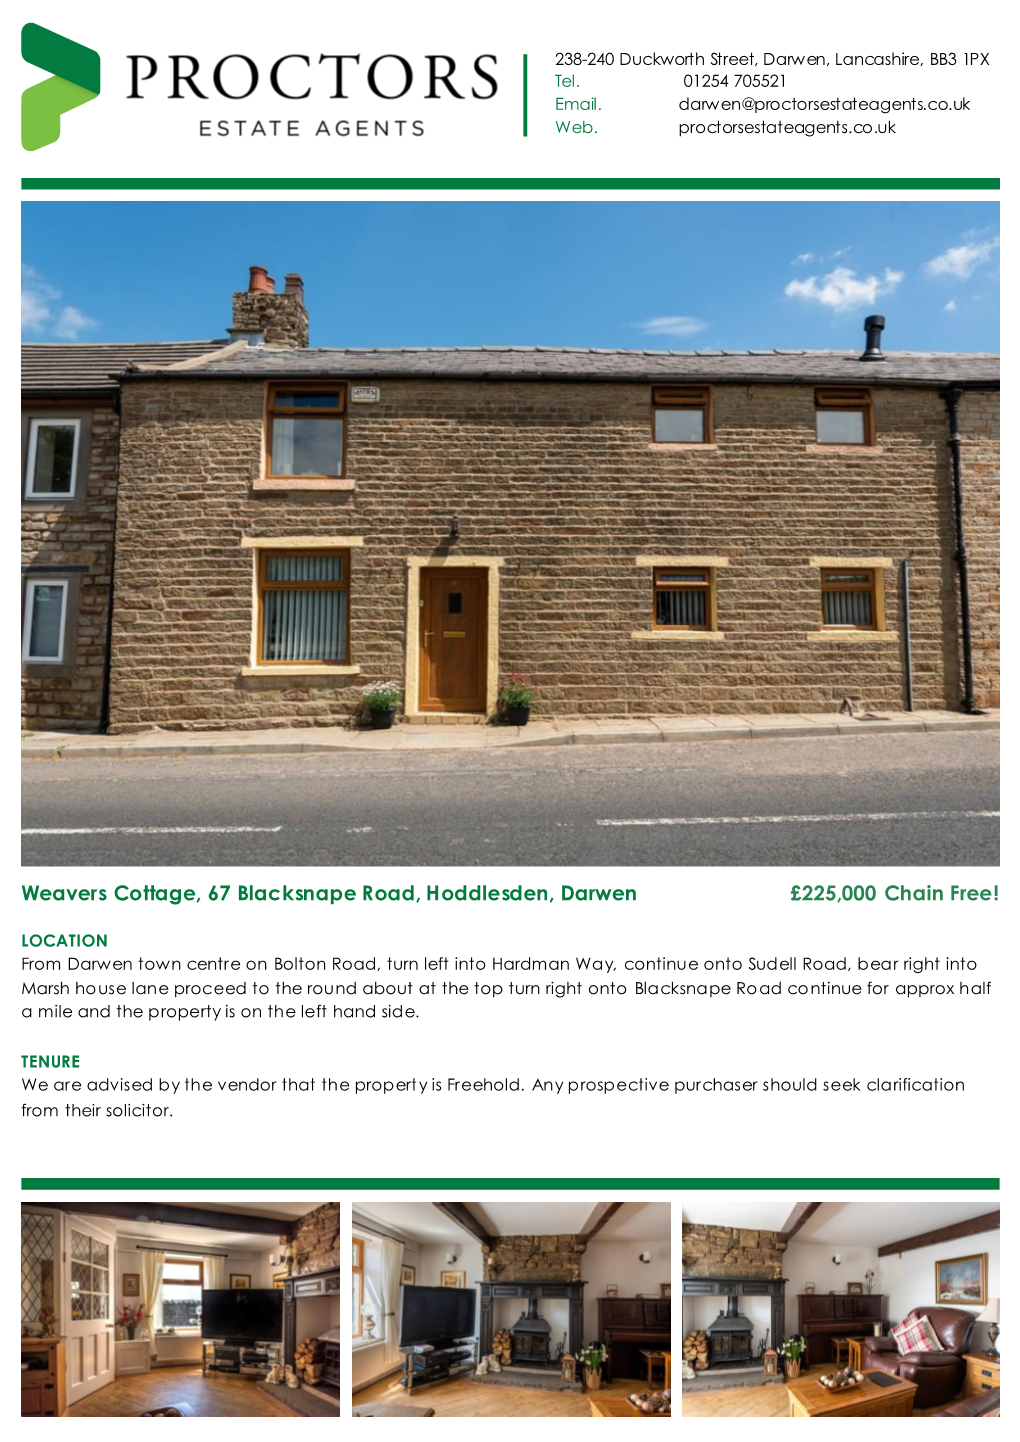 Weavers Cottage, 67 Blacksnape Road, Hoddlesden, Darwen £225,000 Chain Free!